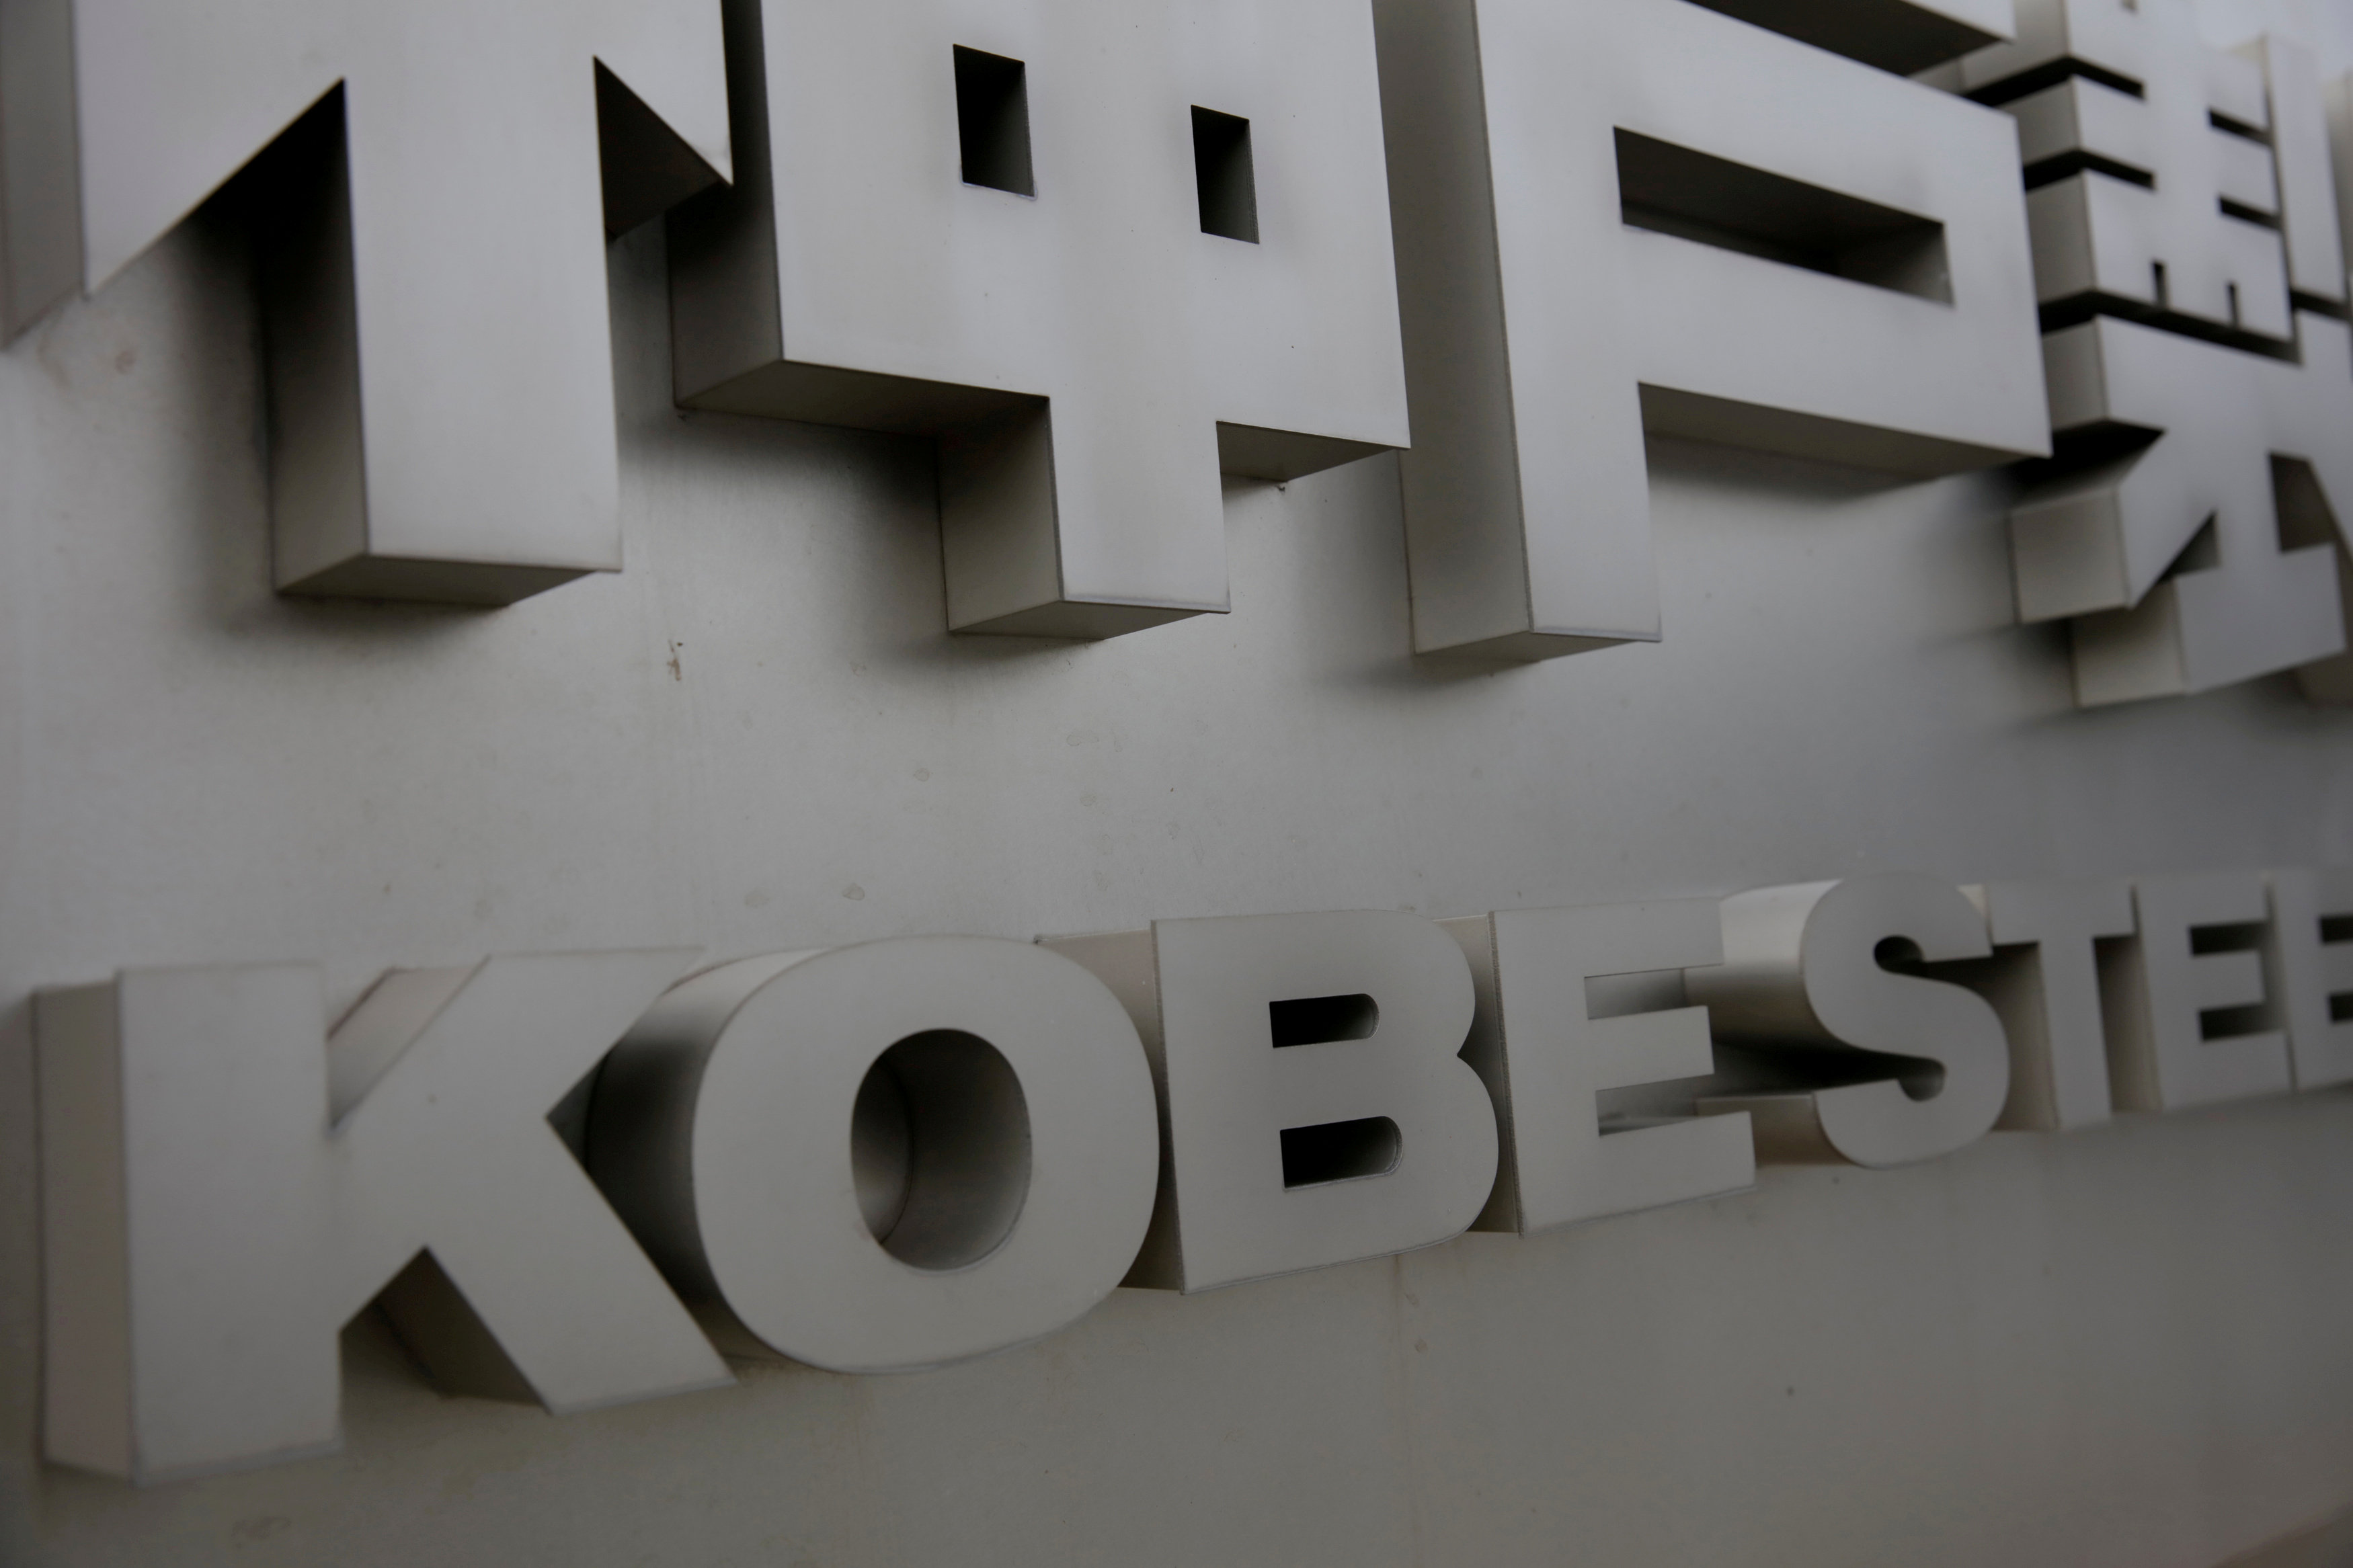 Kobe Steel says under probe over data tampering scandal